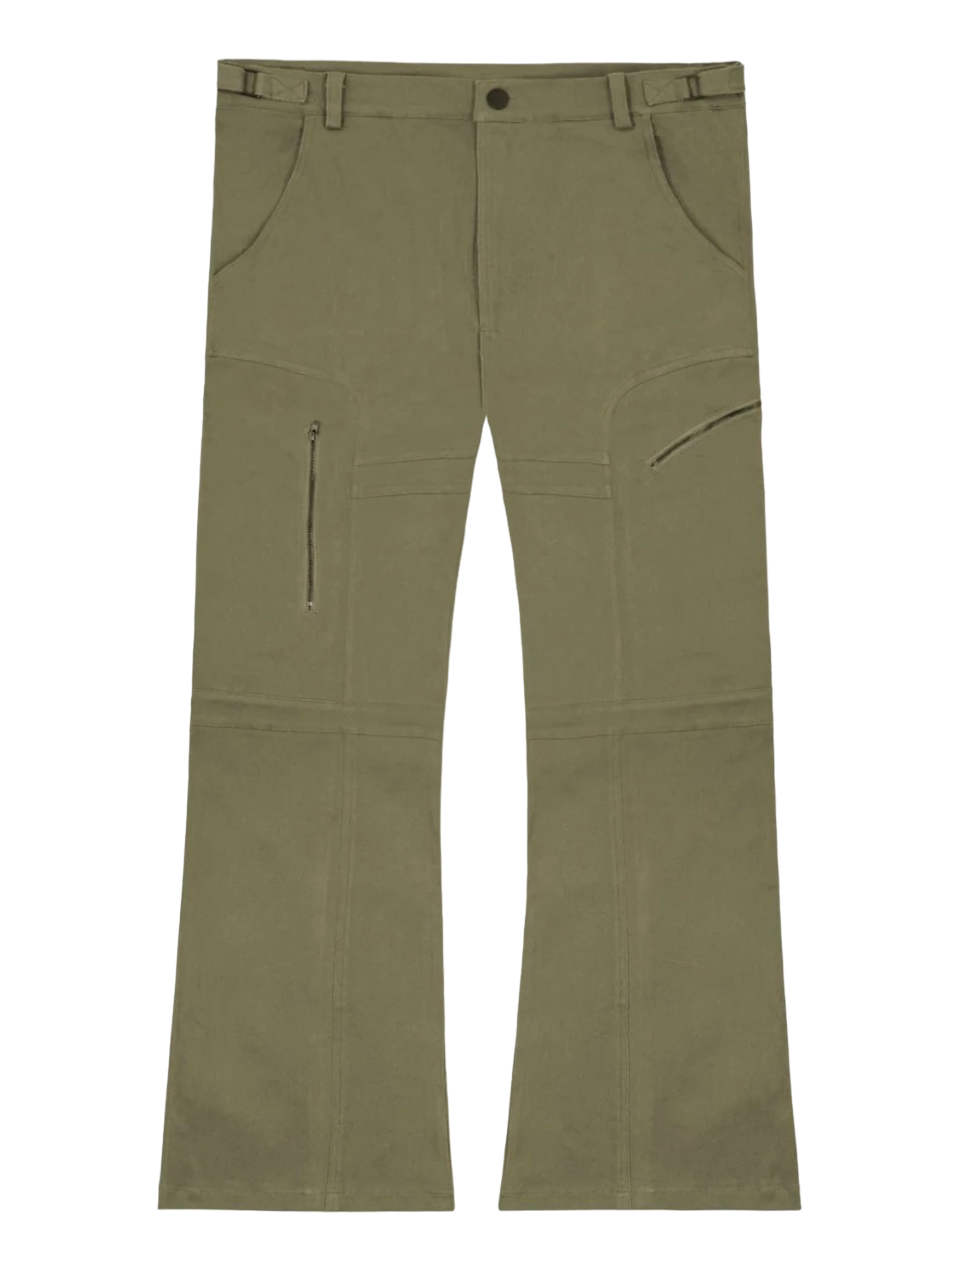 FASH•ON TCT-01 Pants Military Green